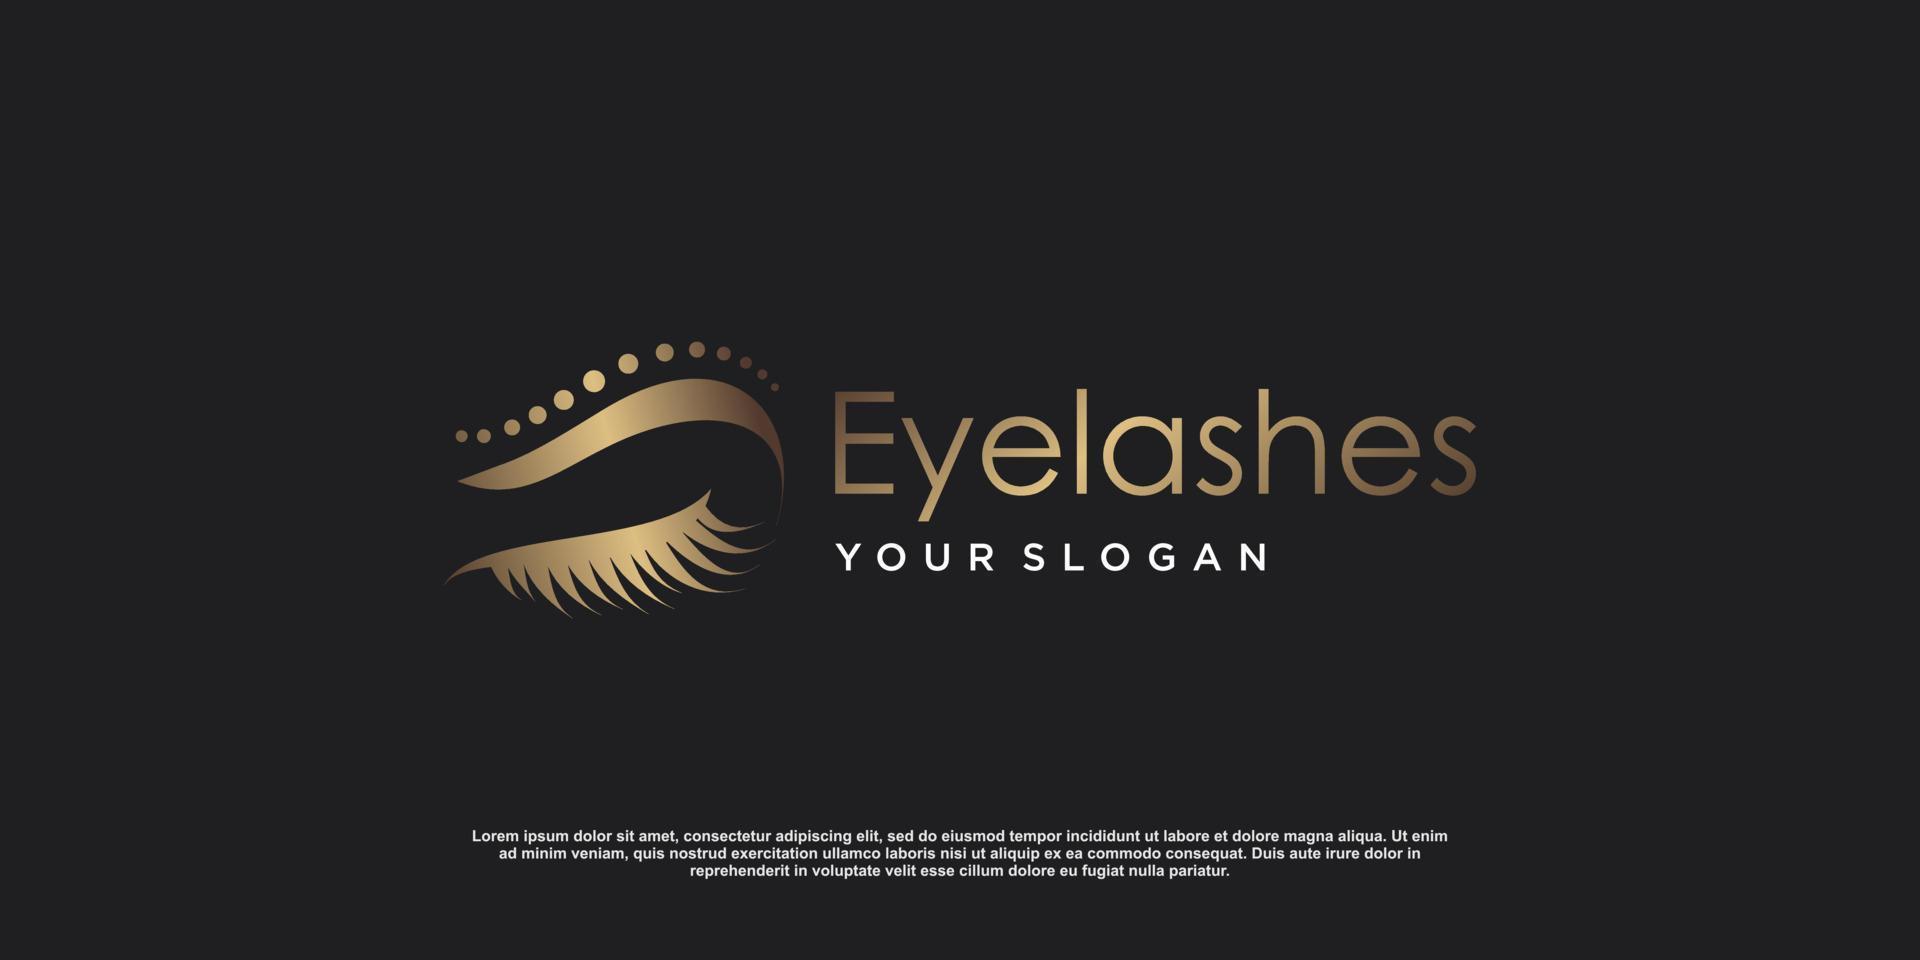 Eye lashes logo design with creative modern concept Premium Vector part 7